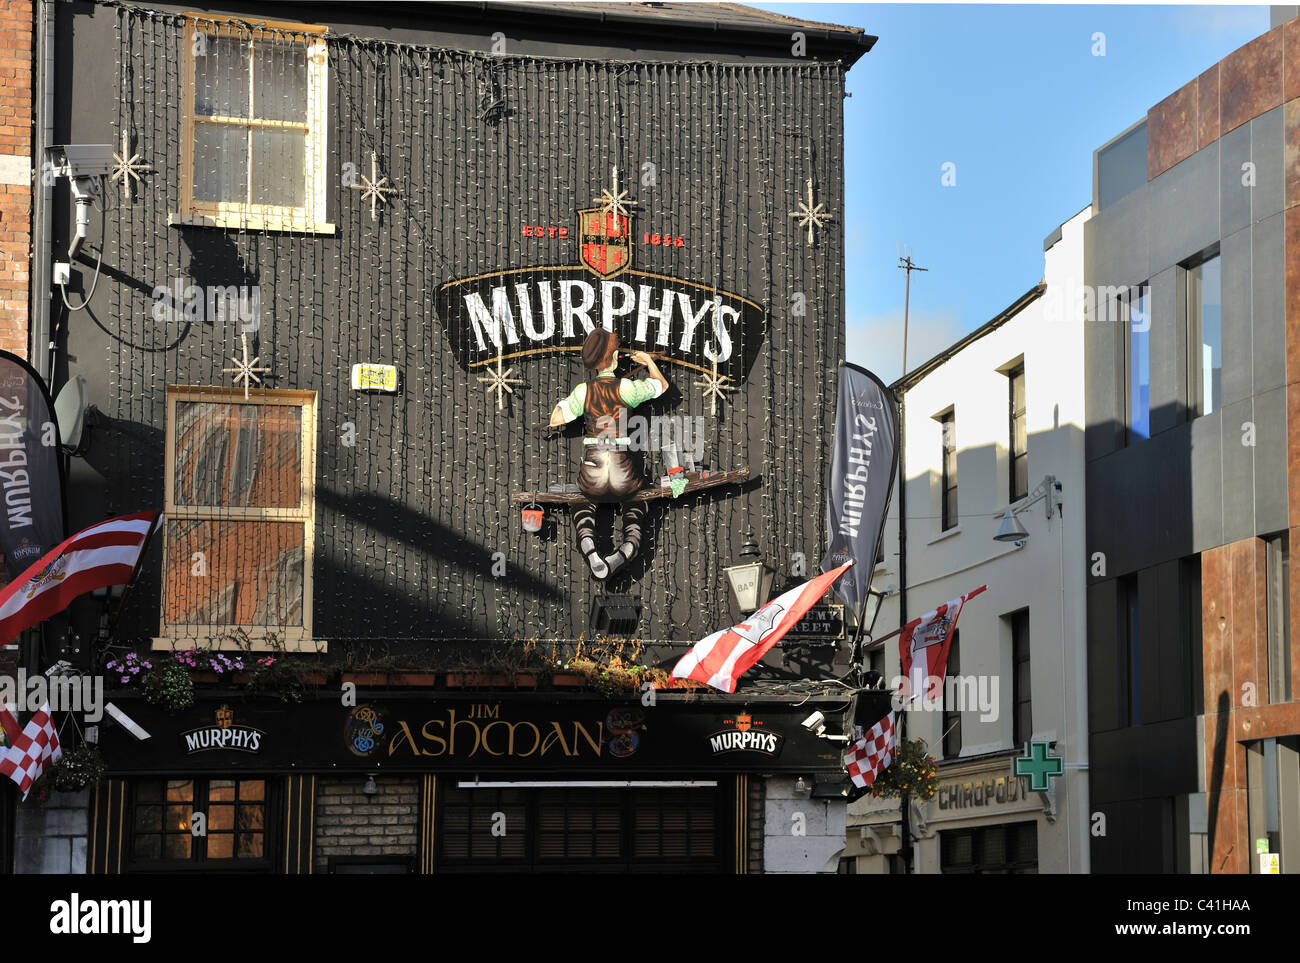 Cork City Centre Ireland Murphy's Stout sign Stock Photo